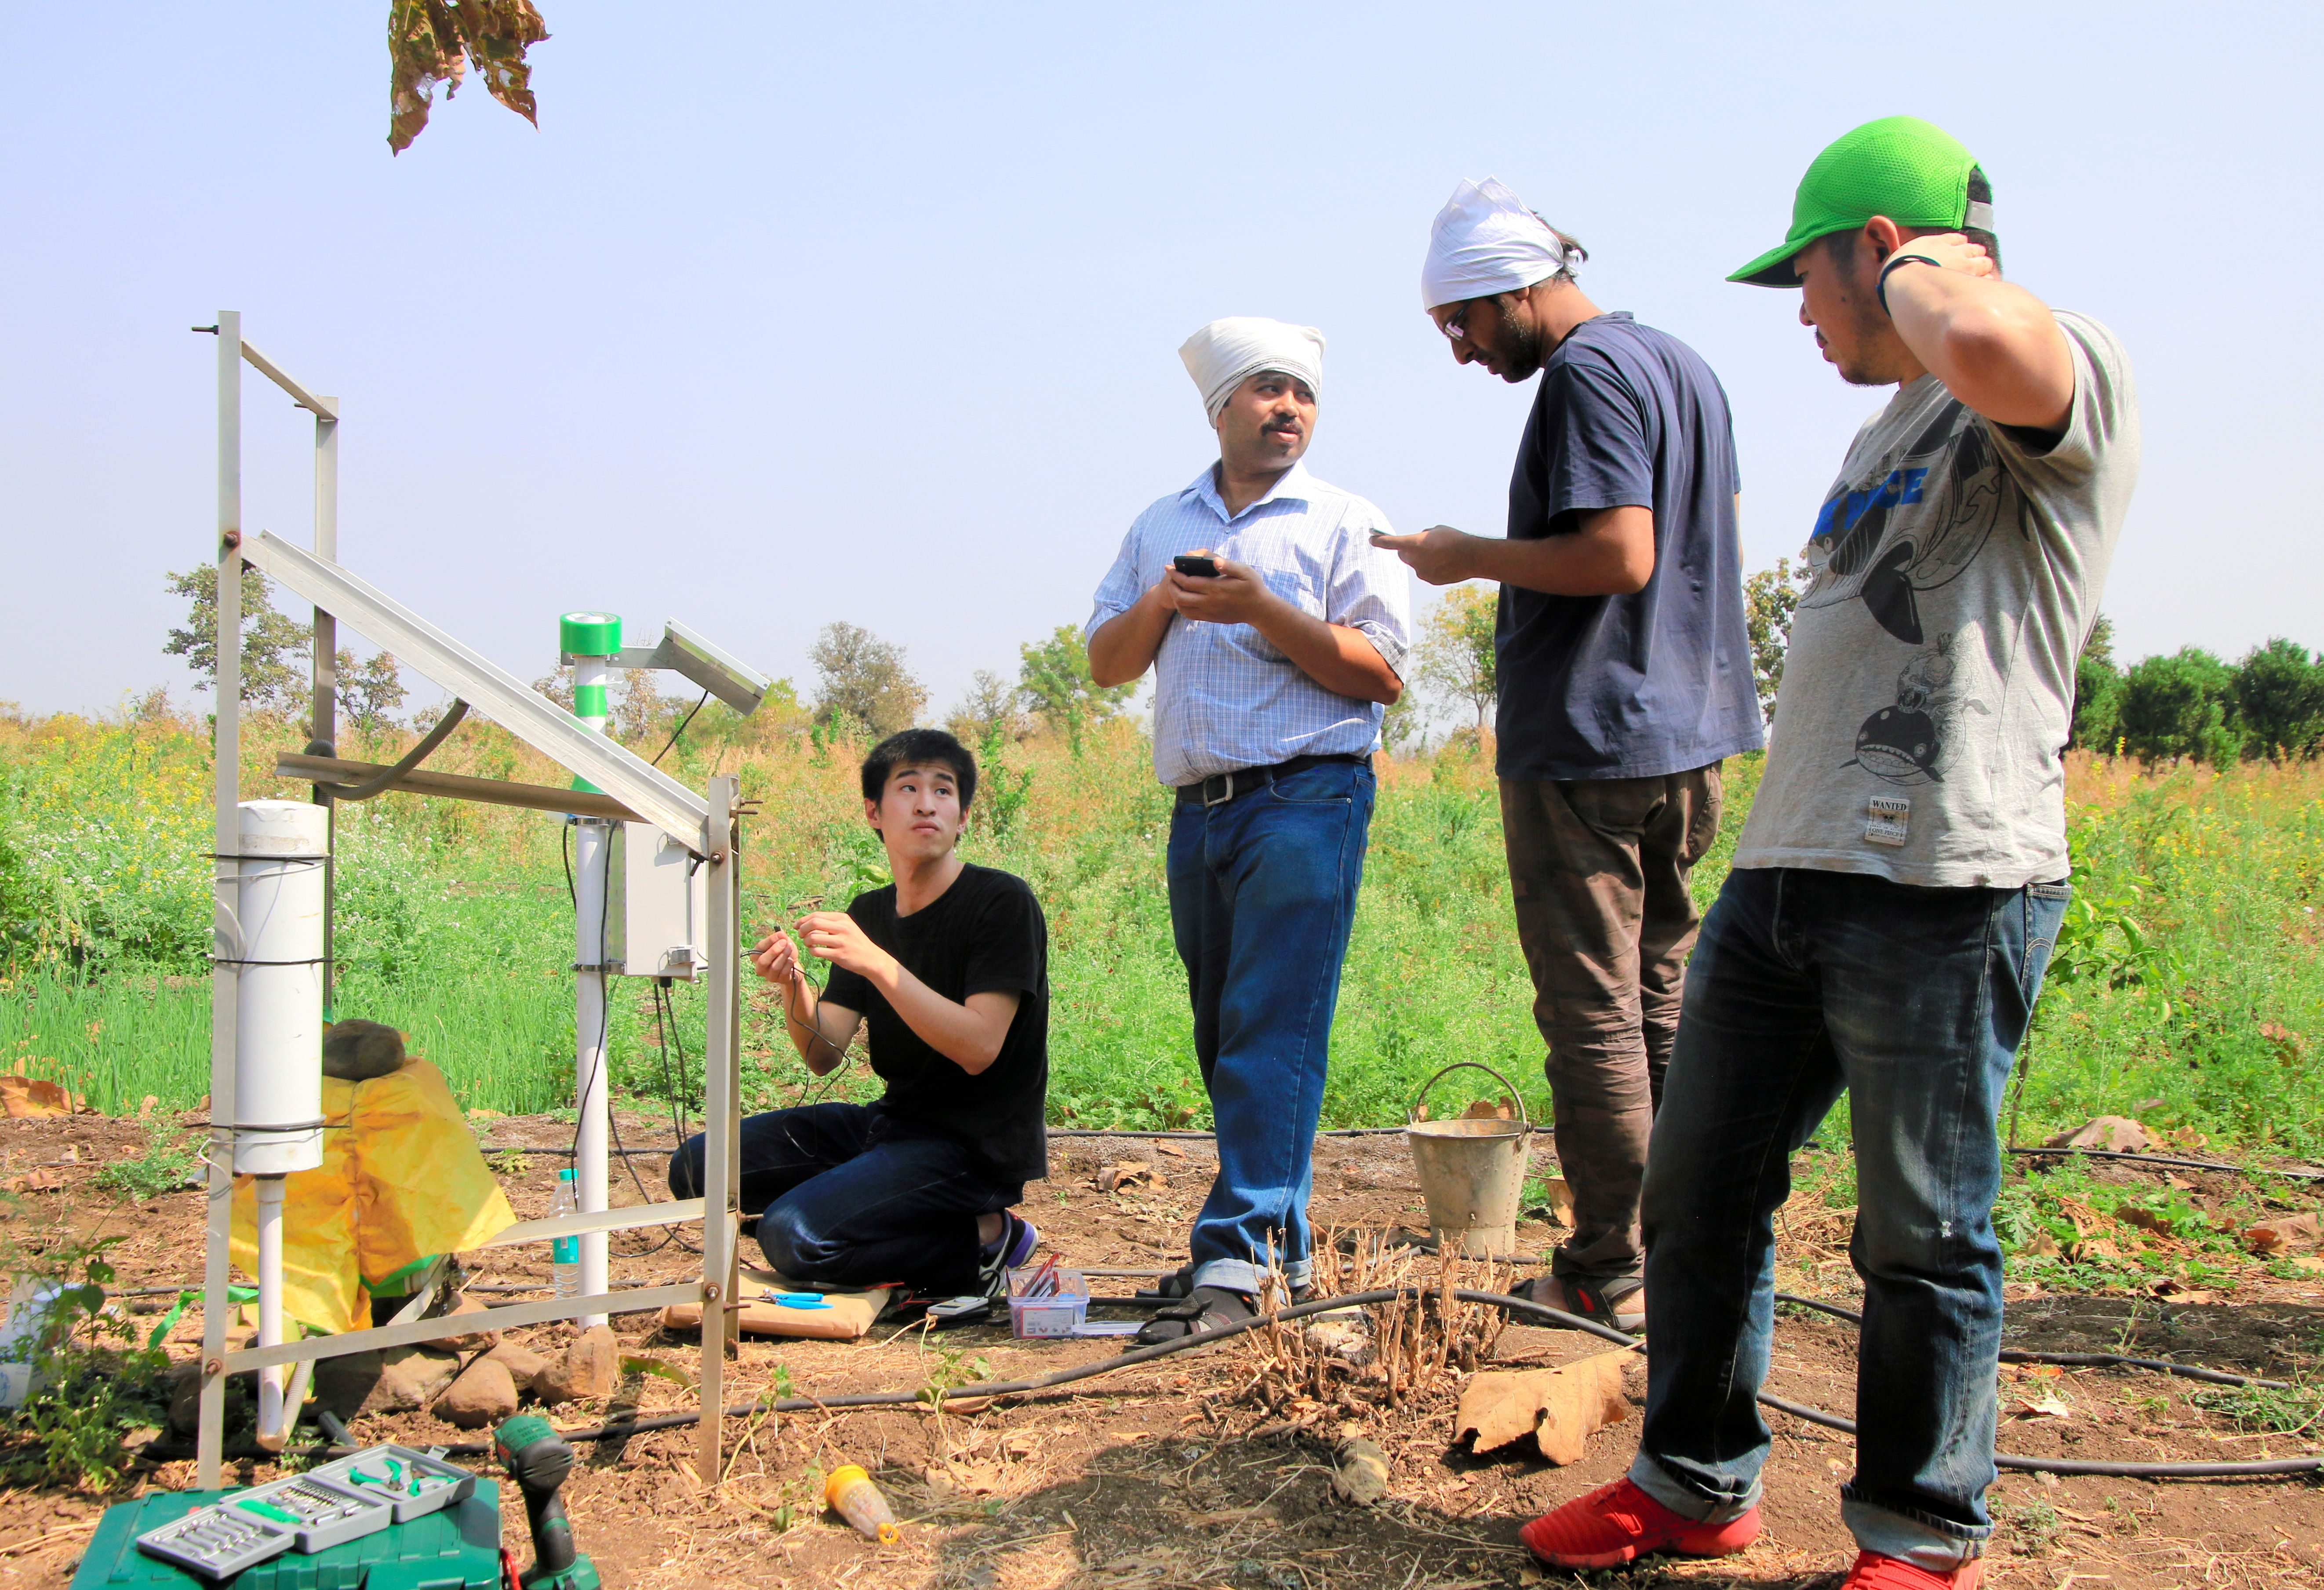 Japan venture introducing smart irrigation to farmers